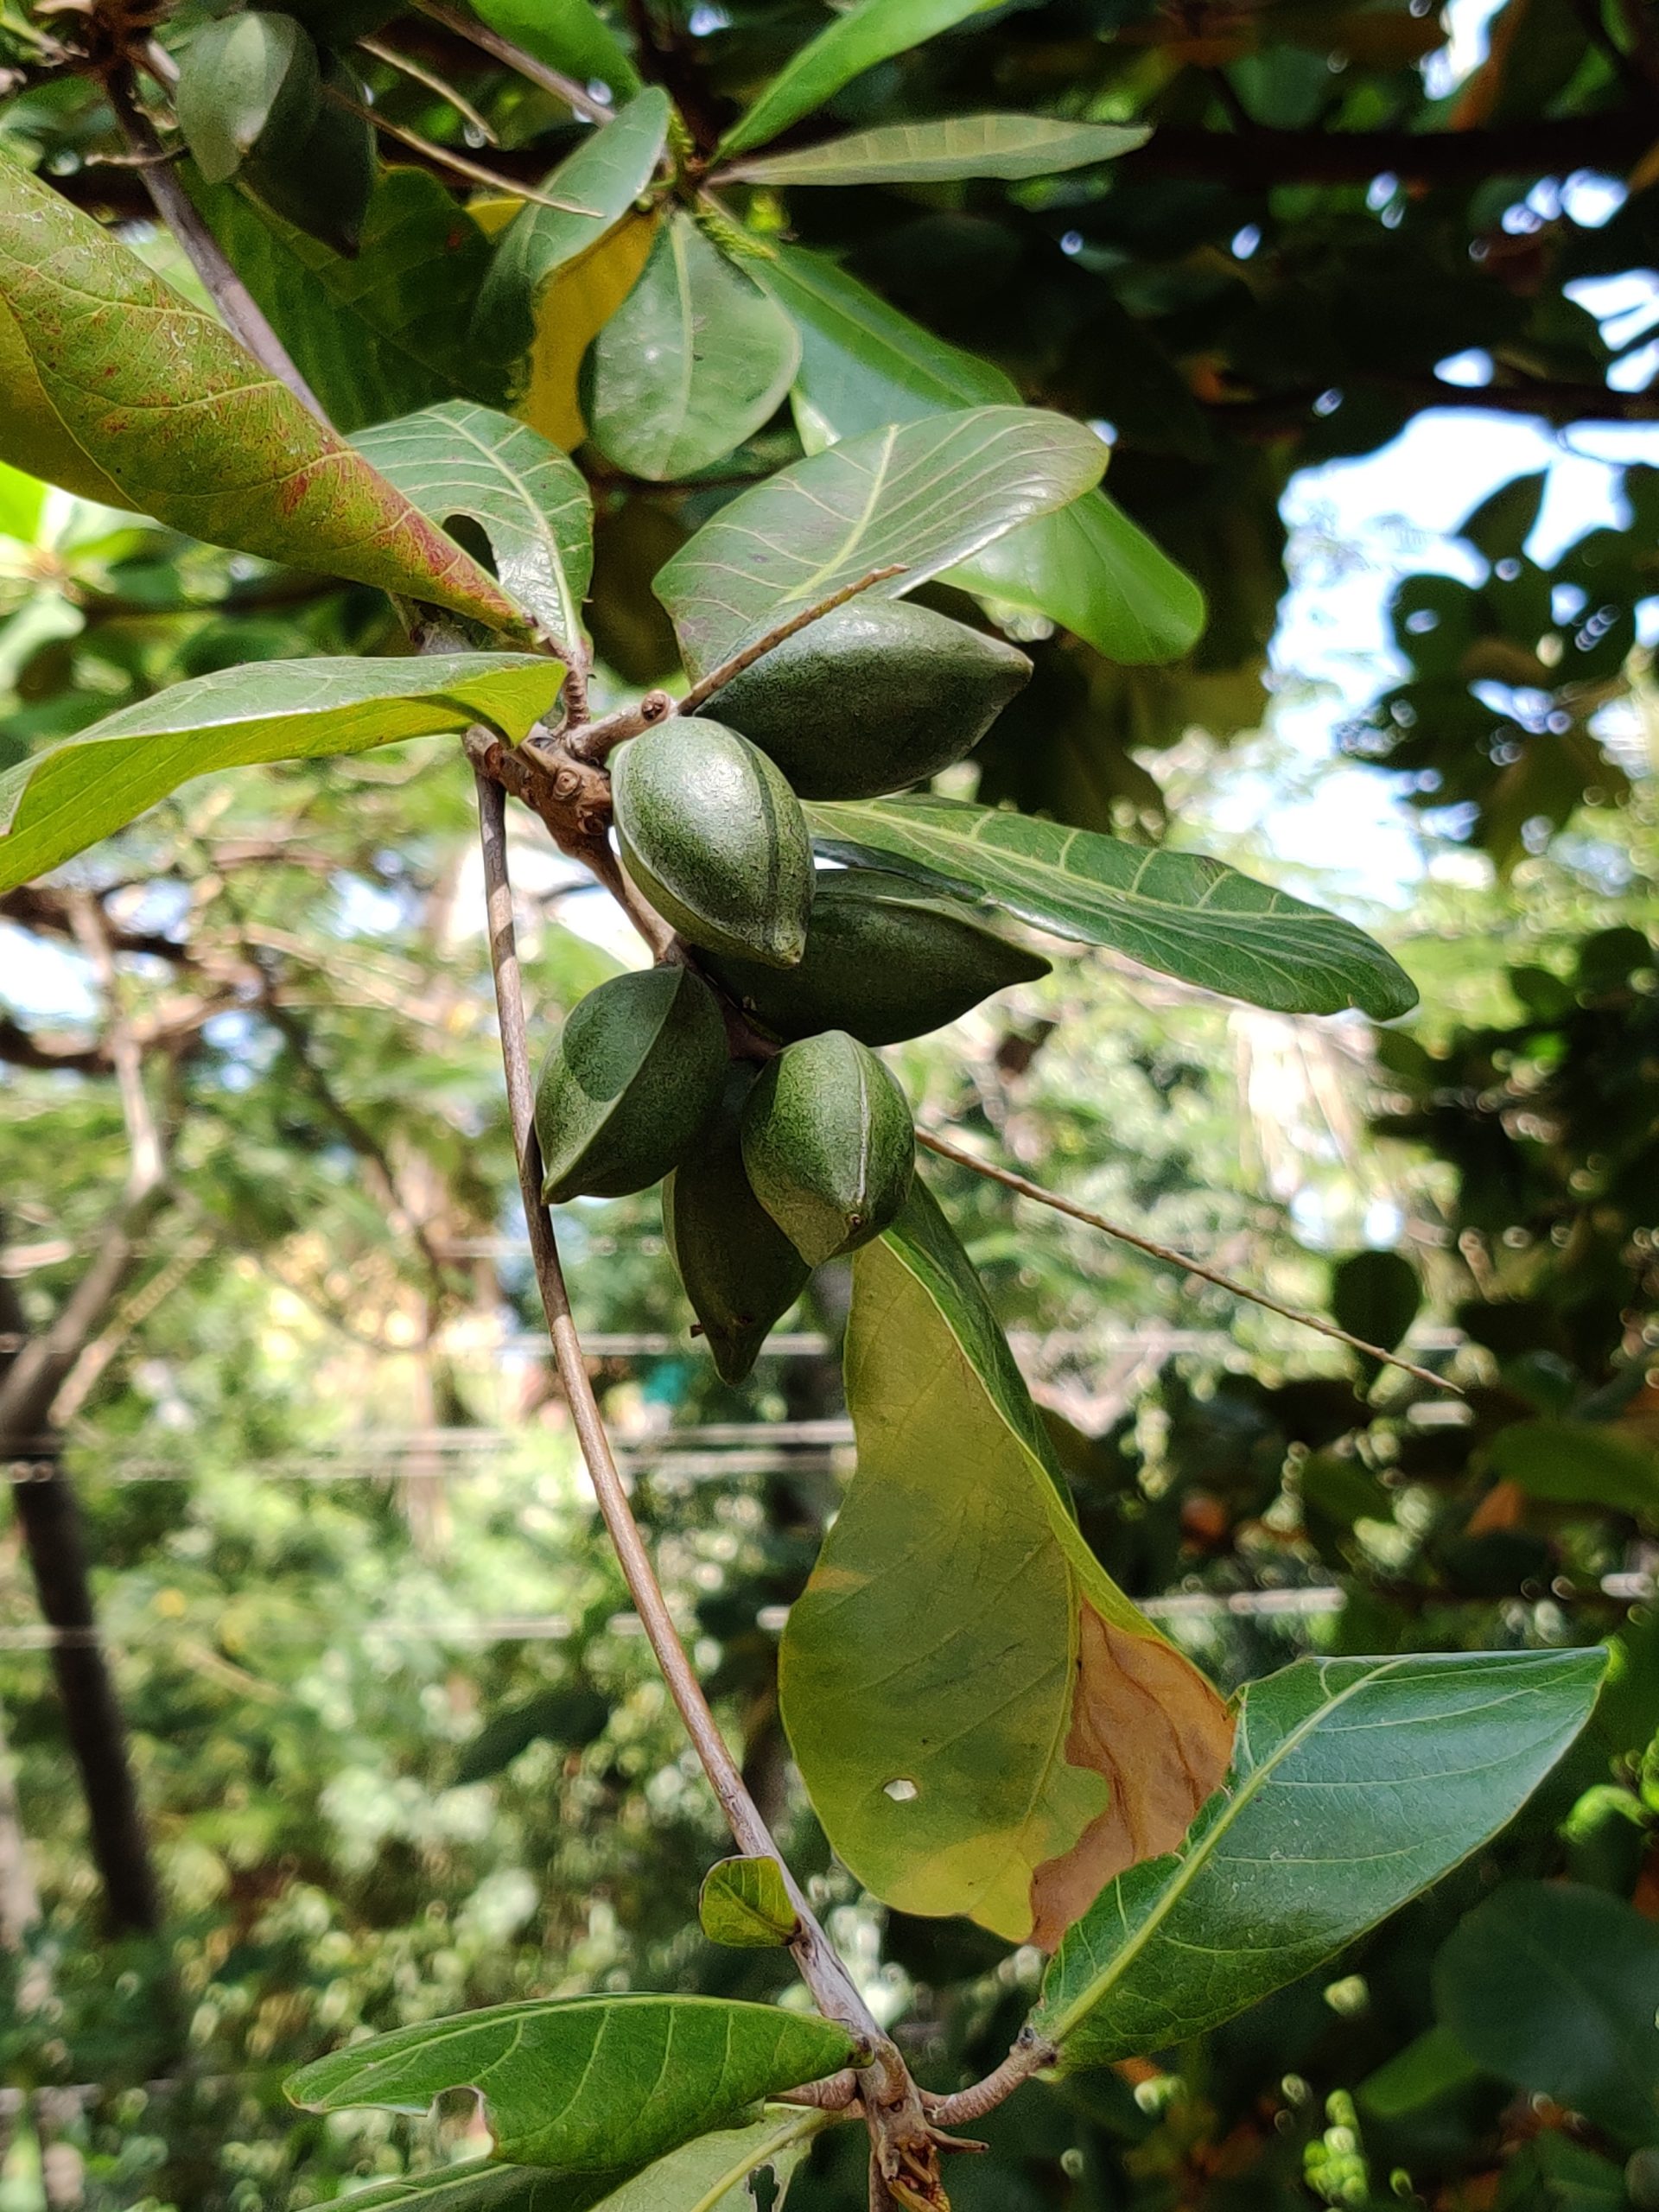 Almonds on a tree